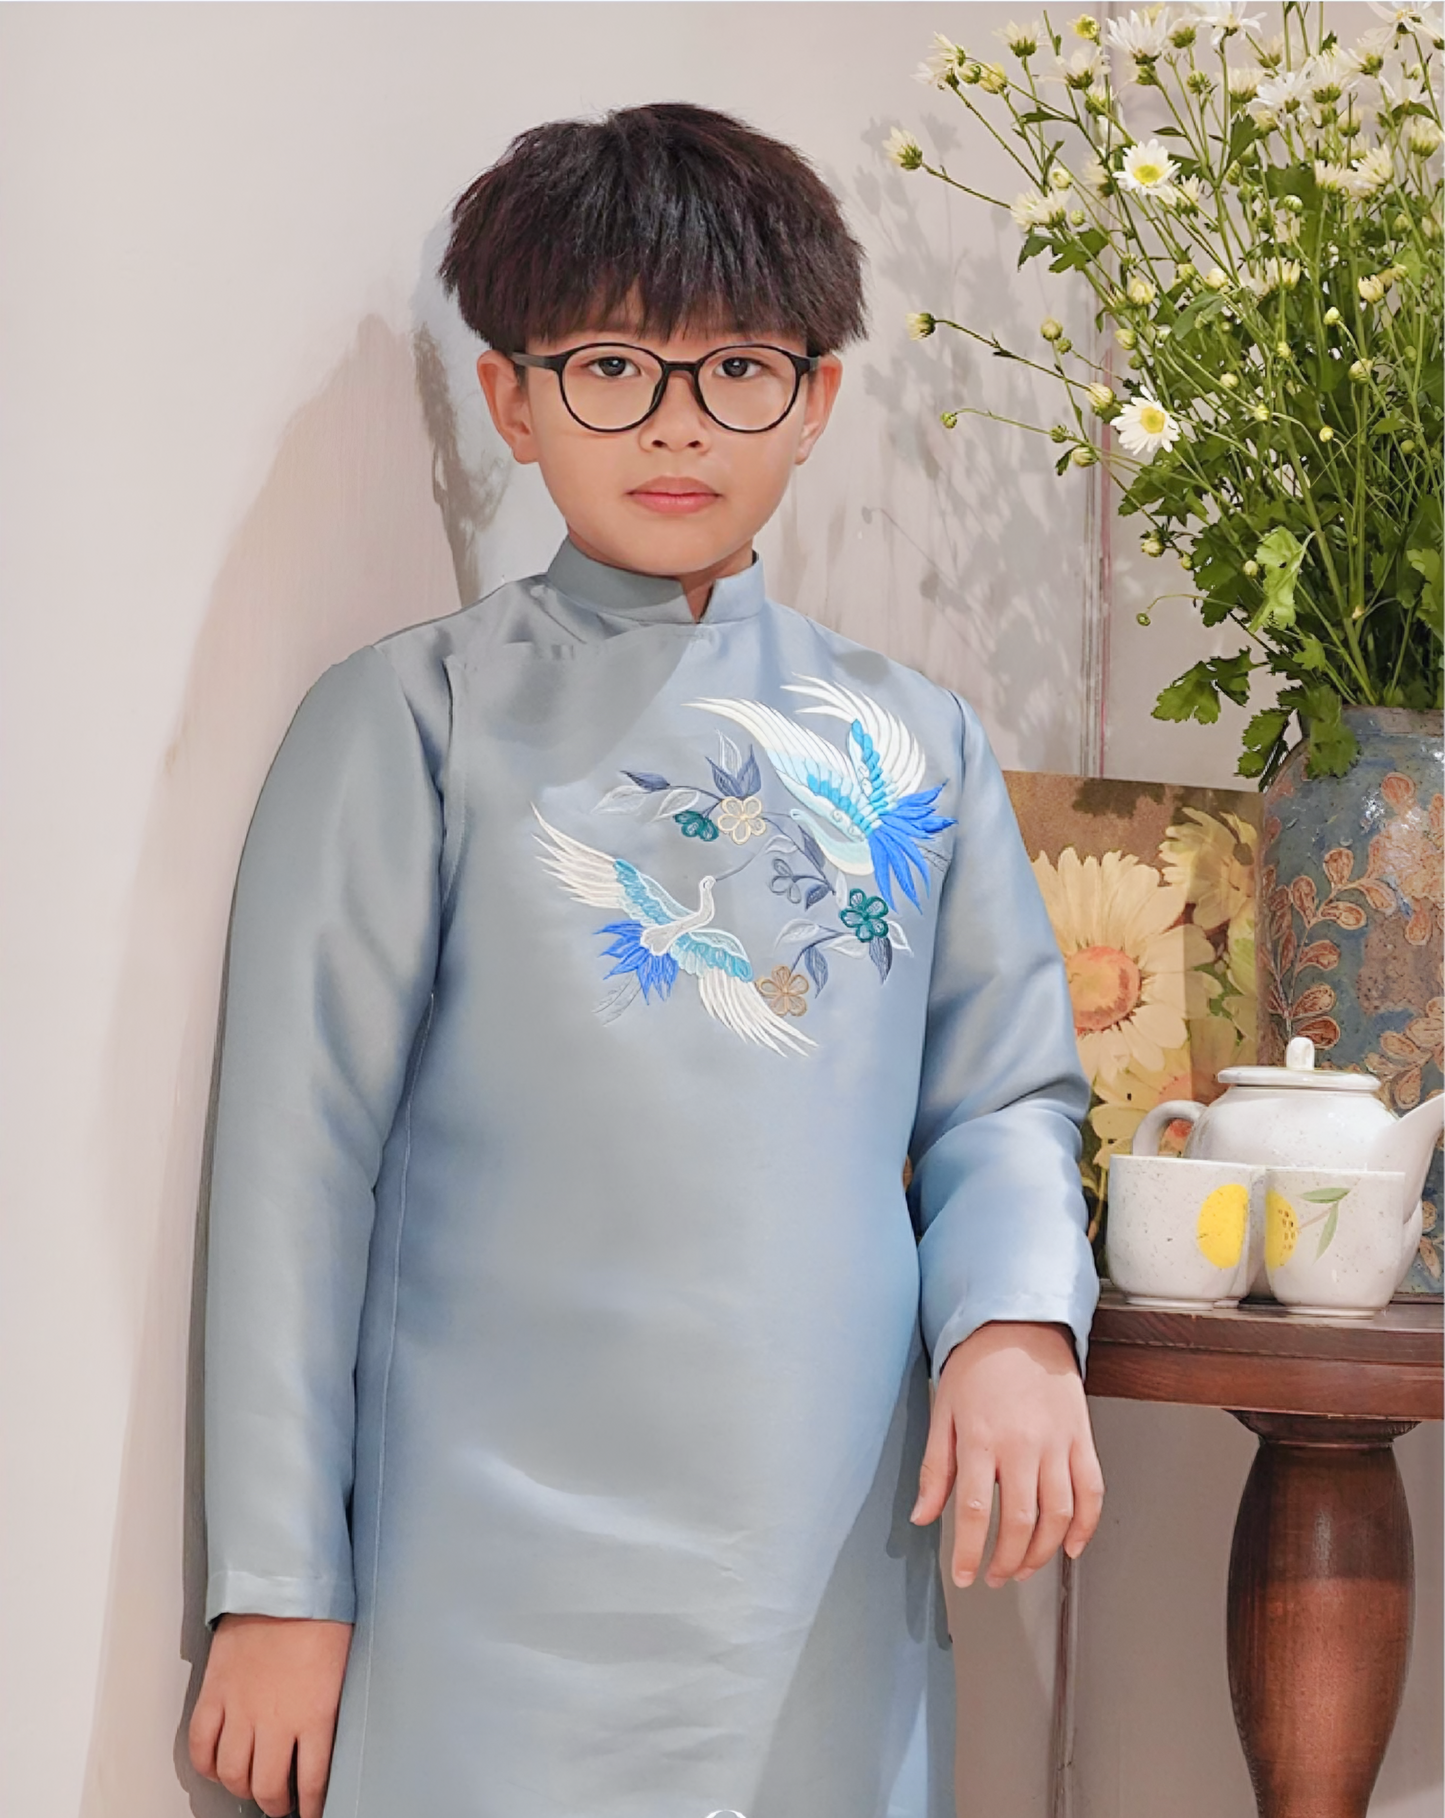 762 - Boy’s Áo Dài Thanh Vân Light Blue (Family Ao Dai). Final sale (no return/exchange)